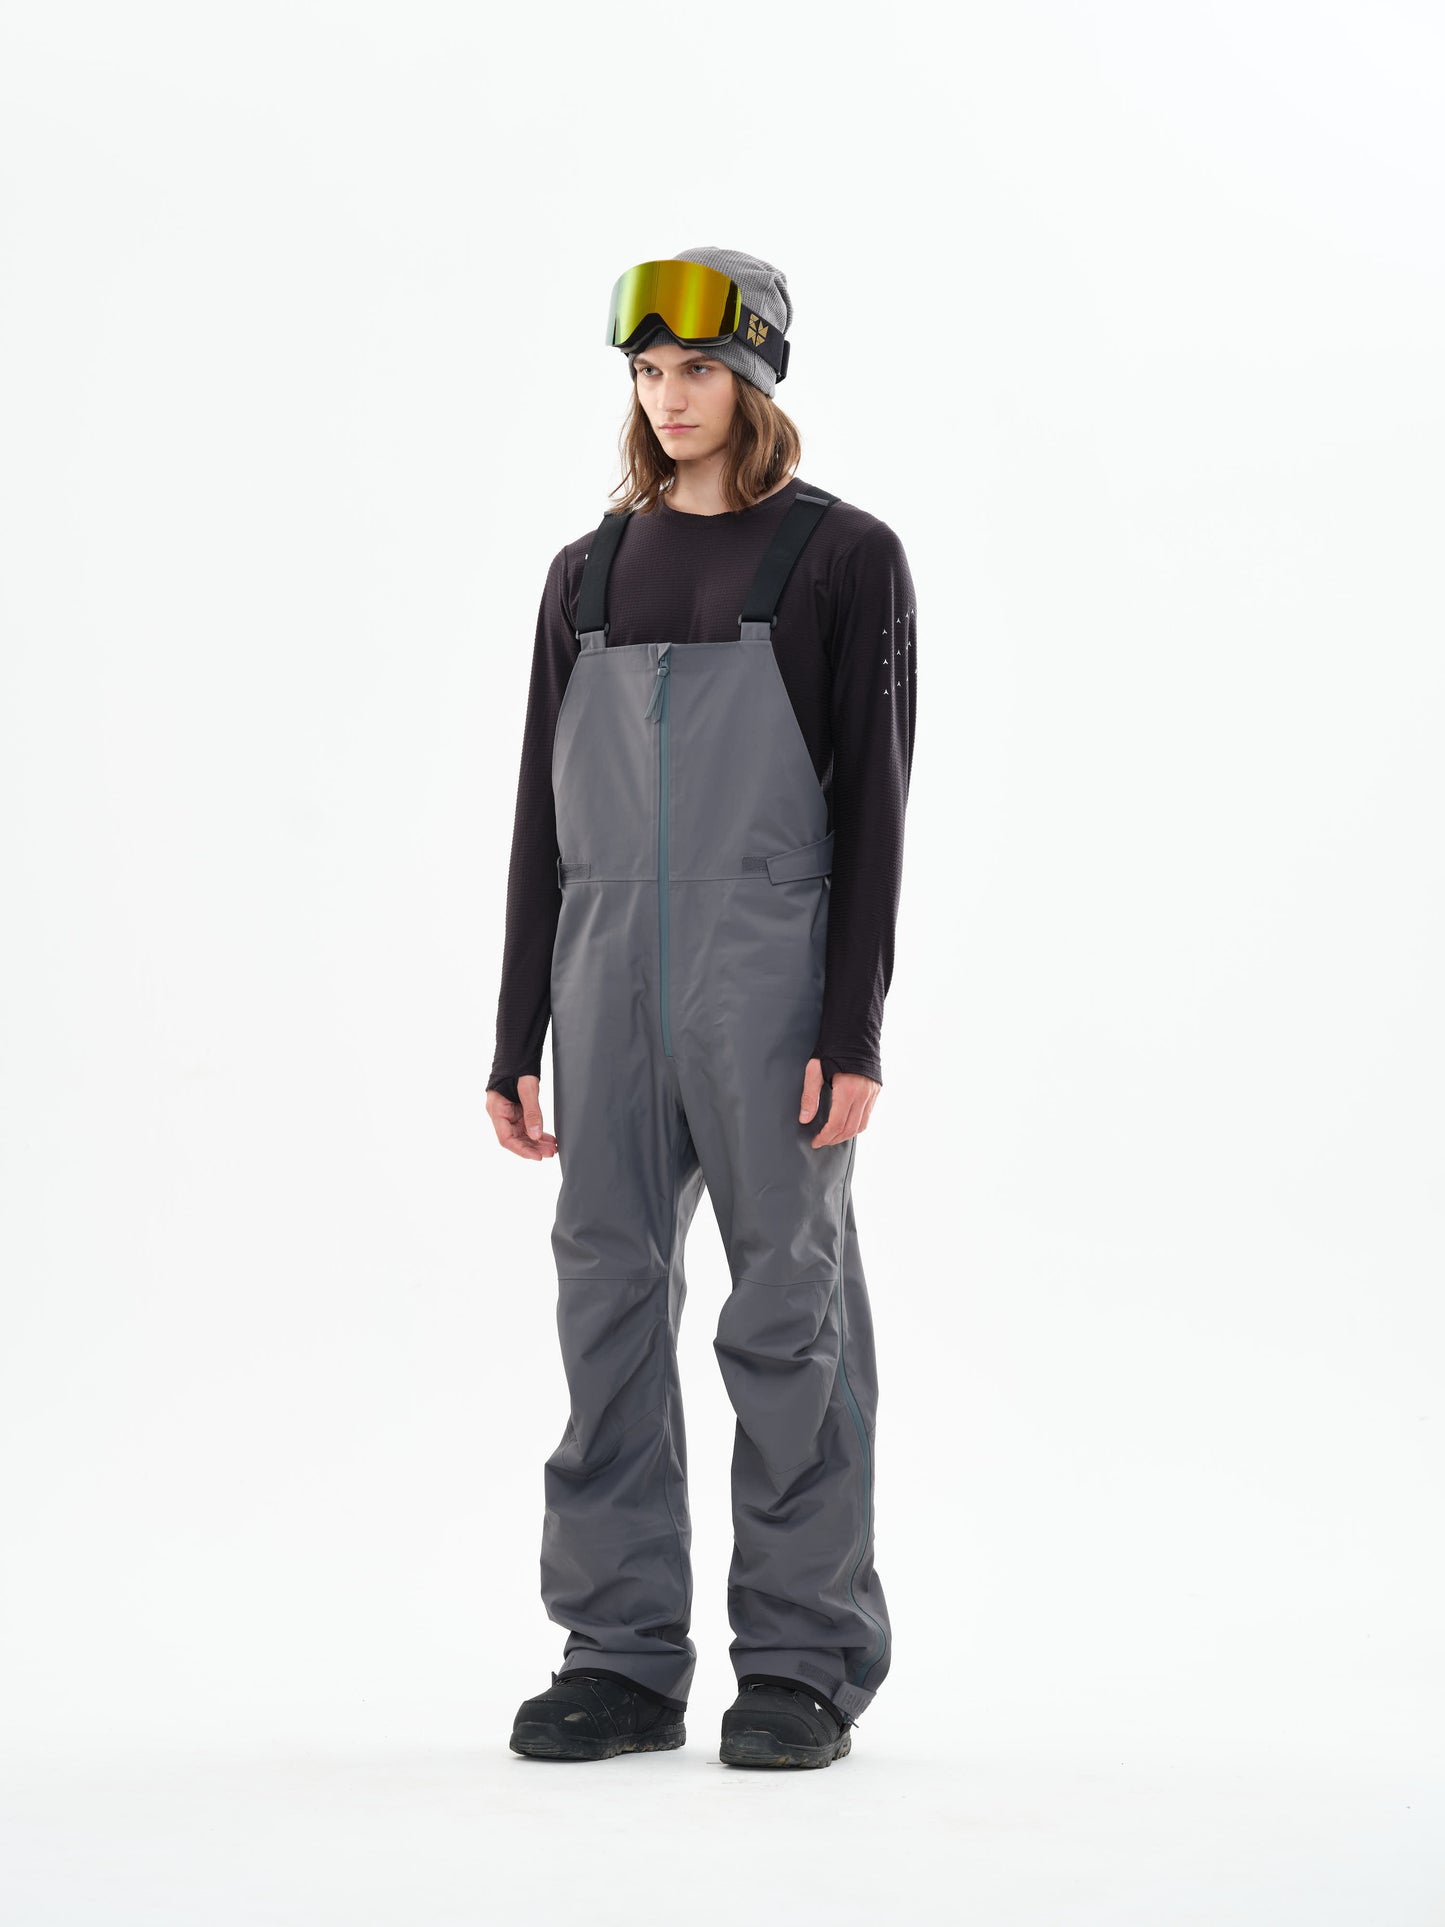 BUMP 23 3L Pro Dermizax® Snowboard/Ski Bib Pants Men Gray